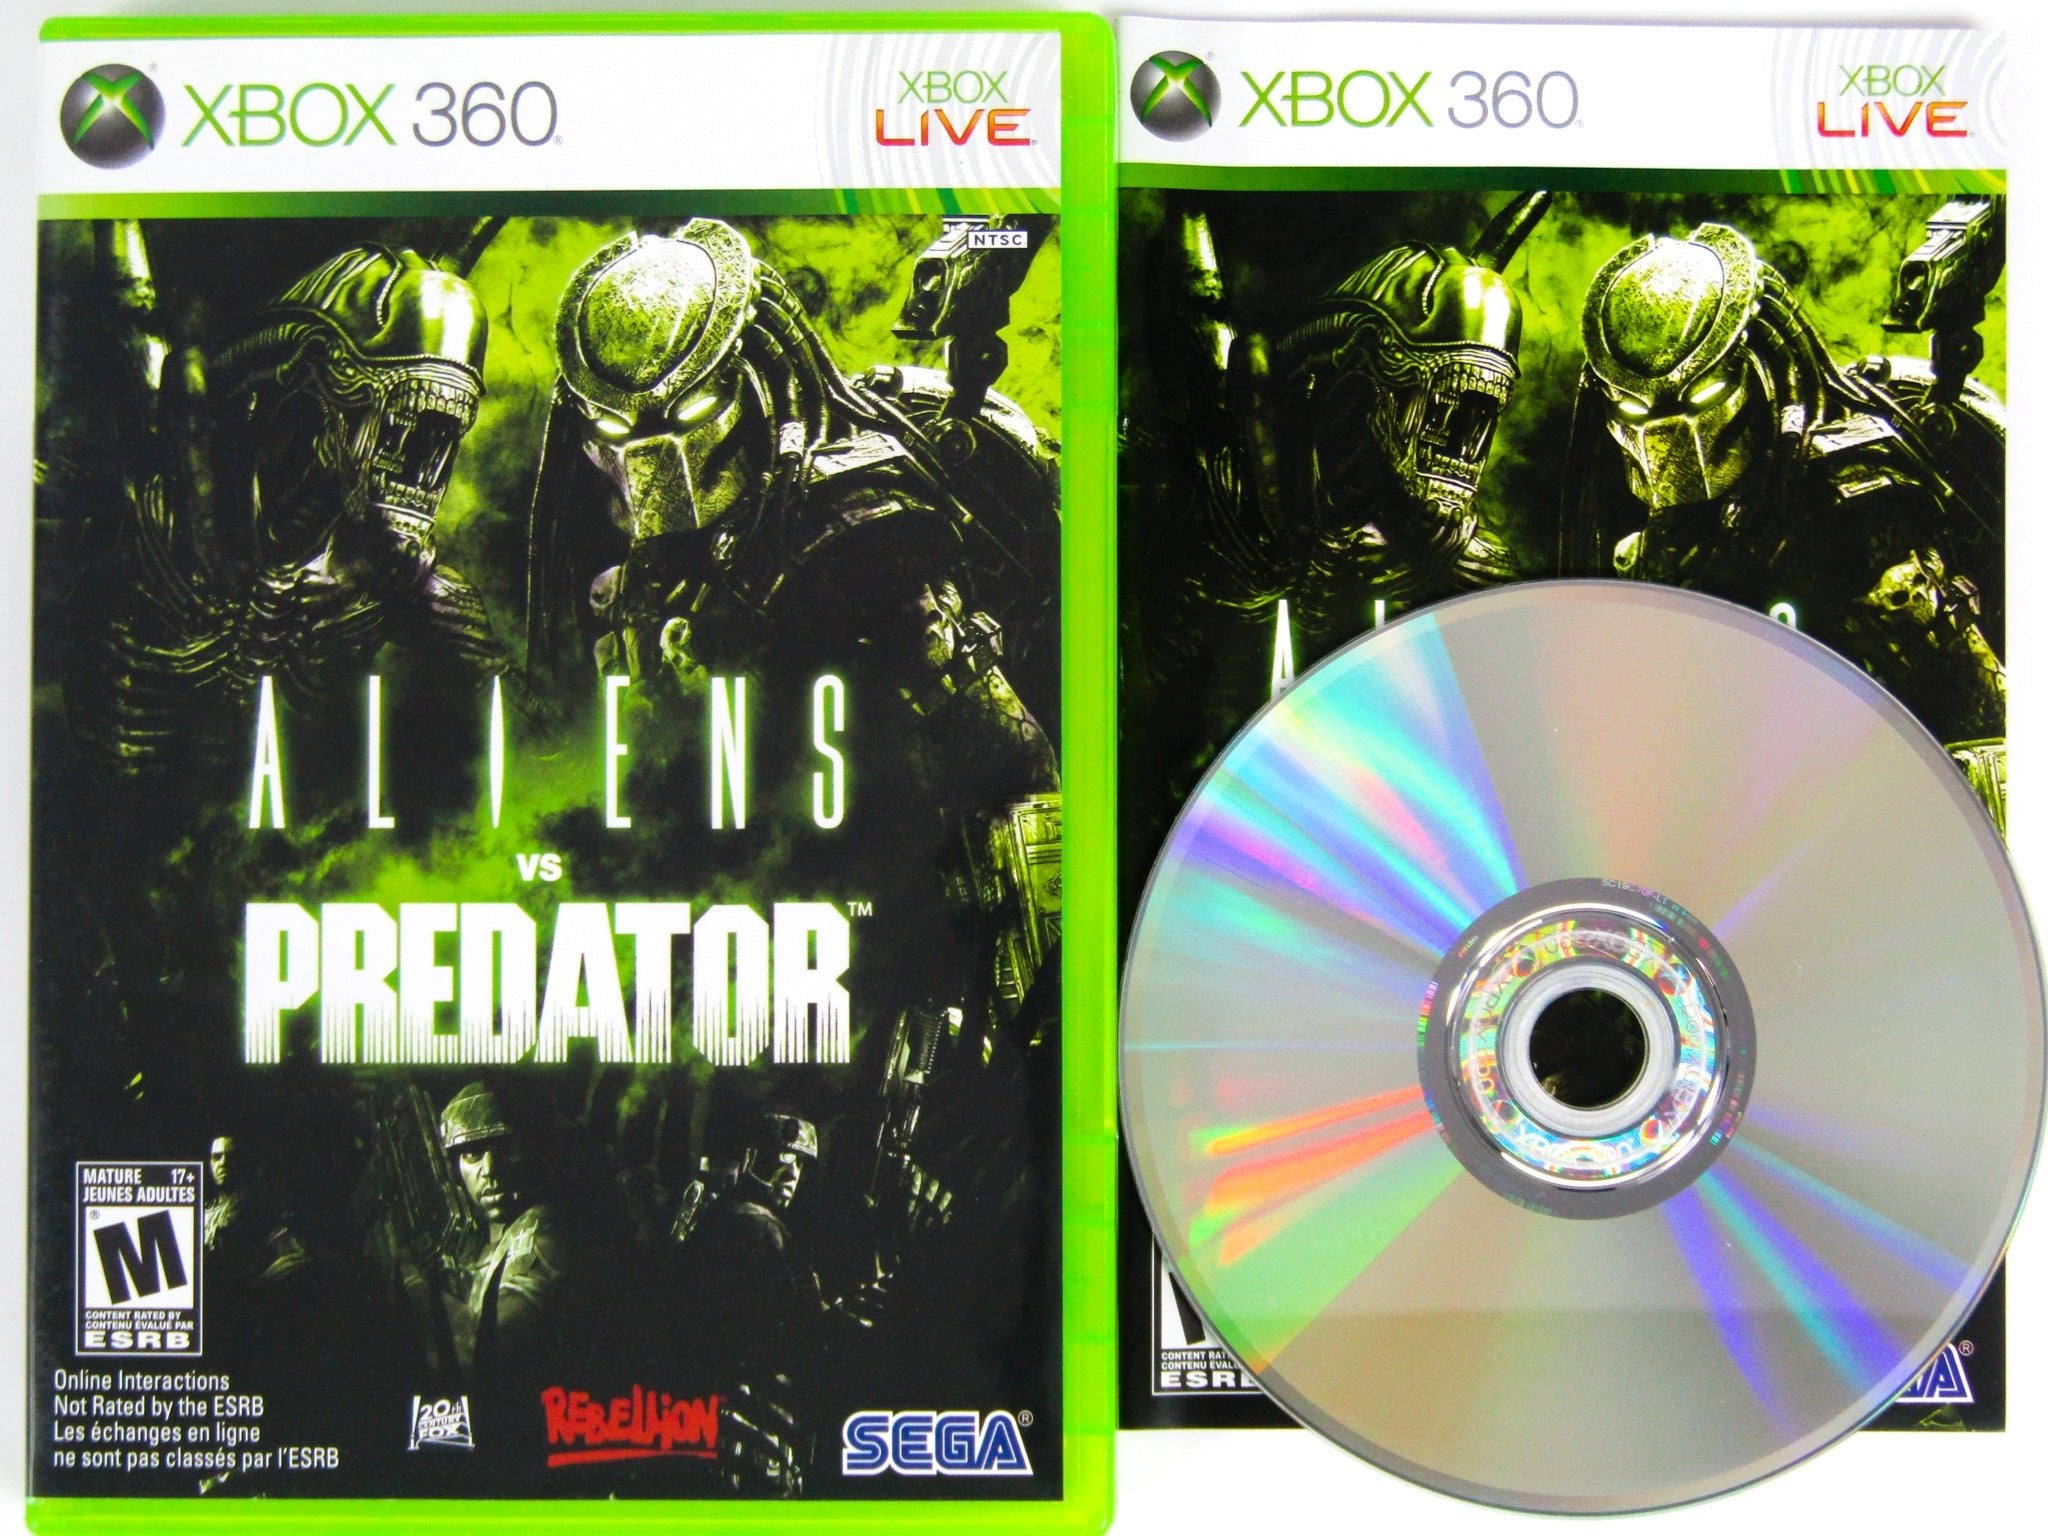 Aliens vs. Predator e Sonic entram na retrocompatibilidade do Xbox One